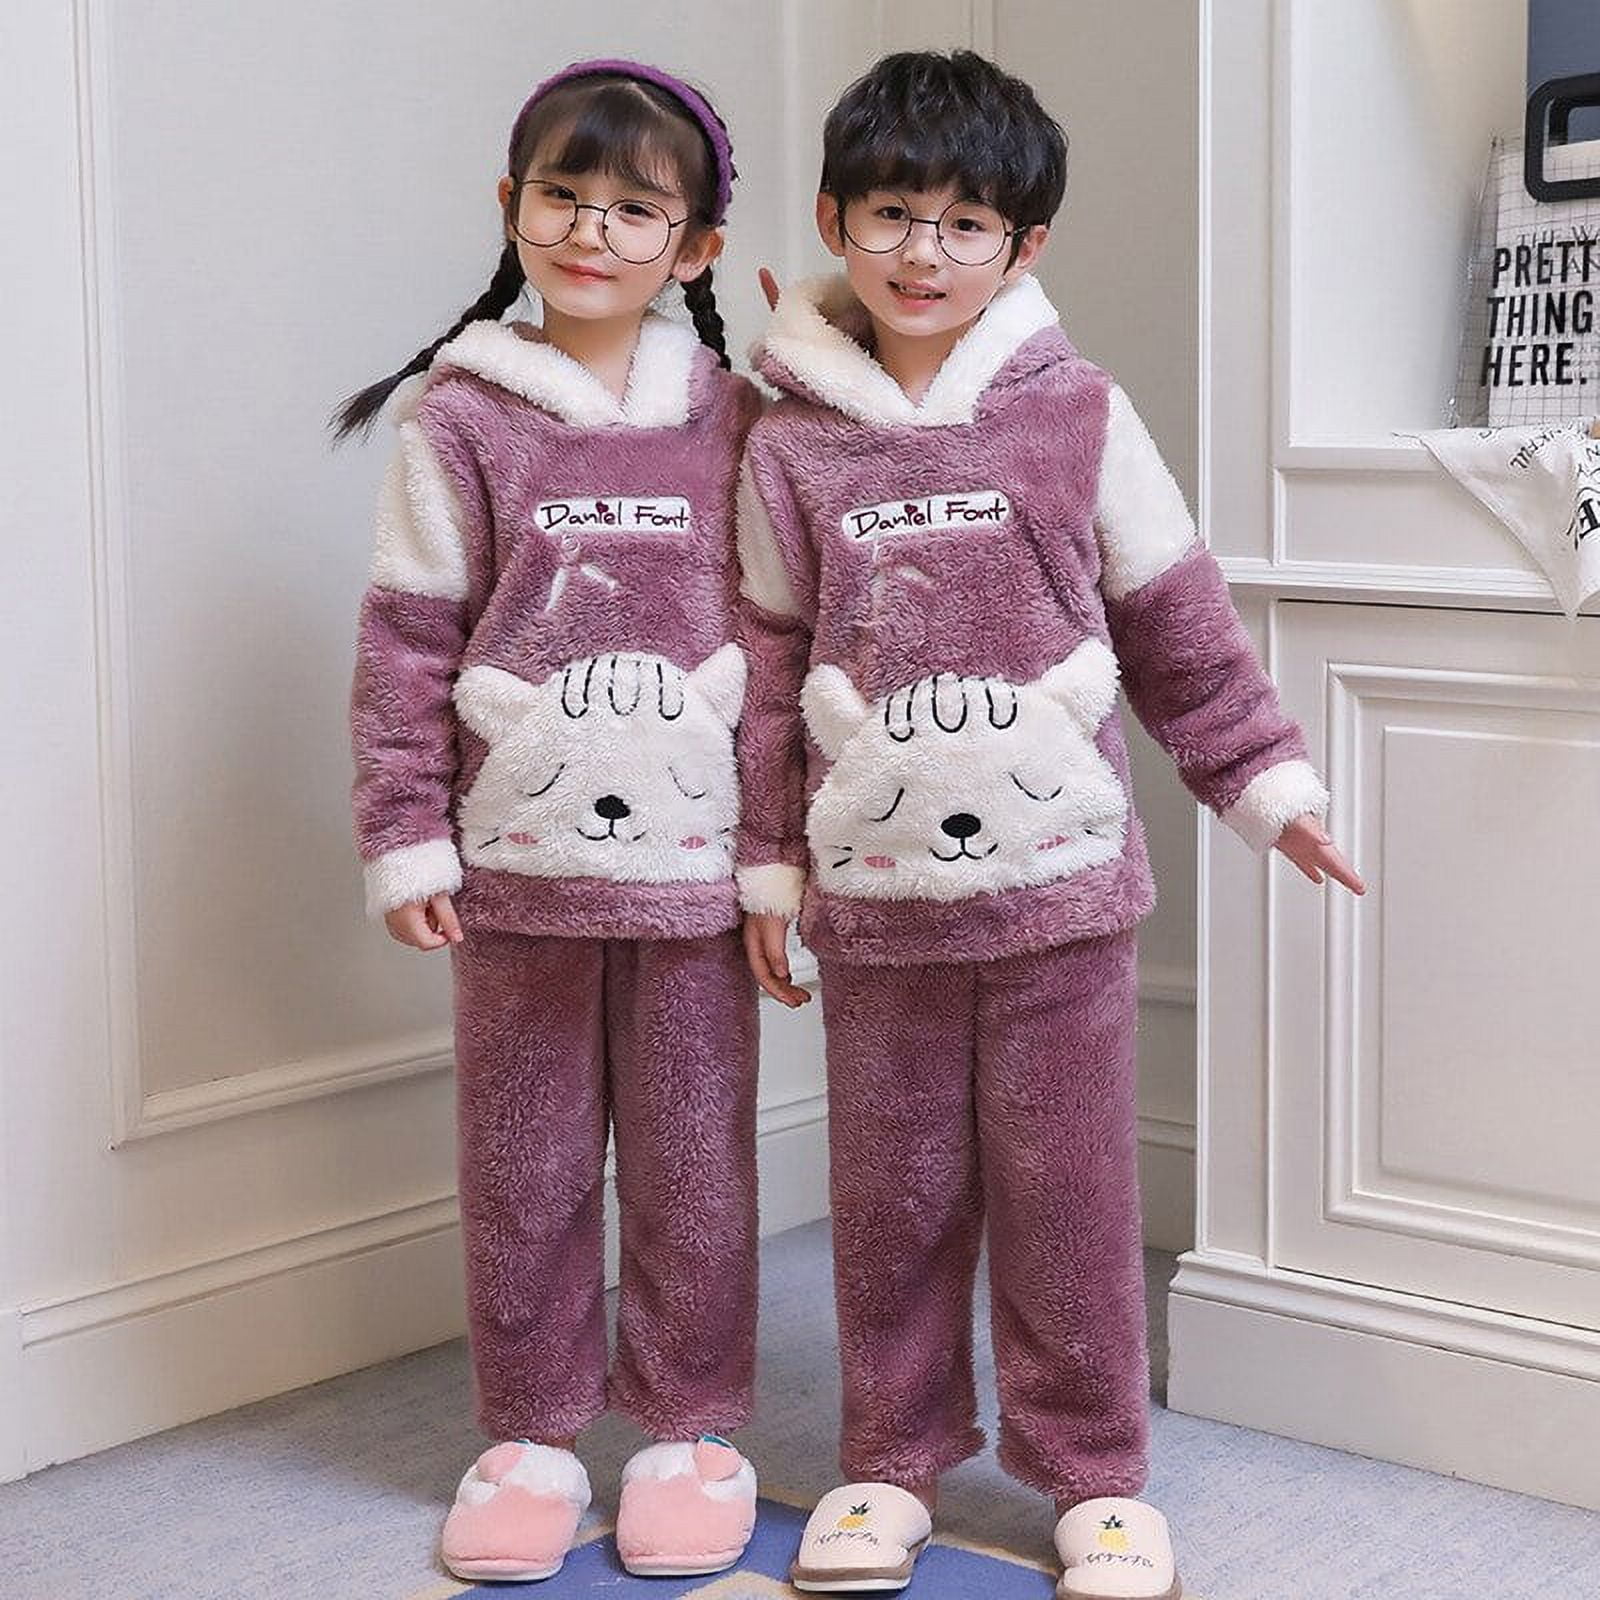 New Hello Kitty and Dear Daniel pajamas at Walamrt right now